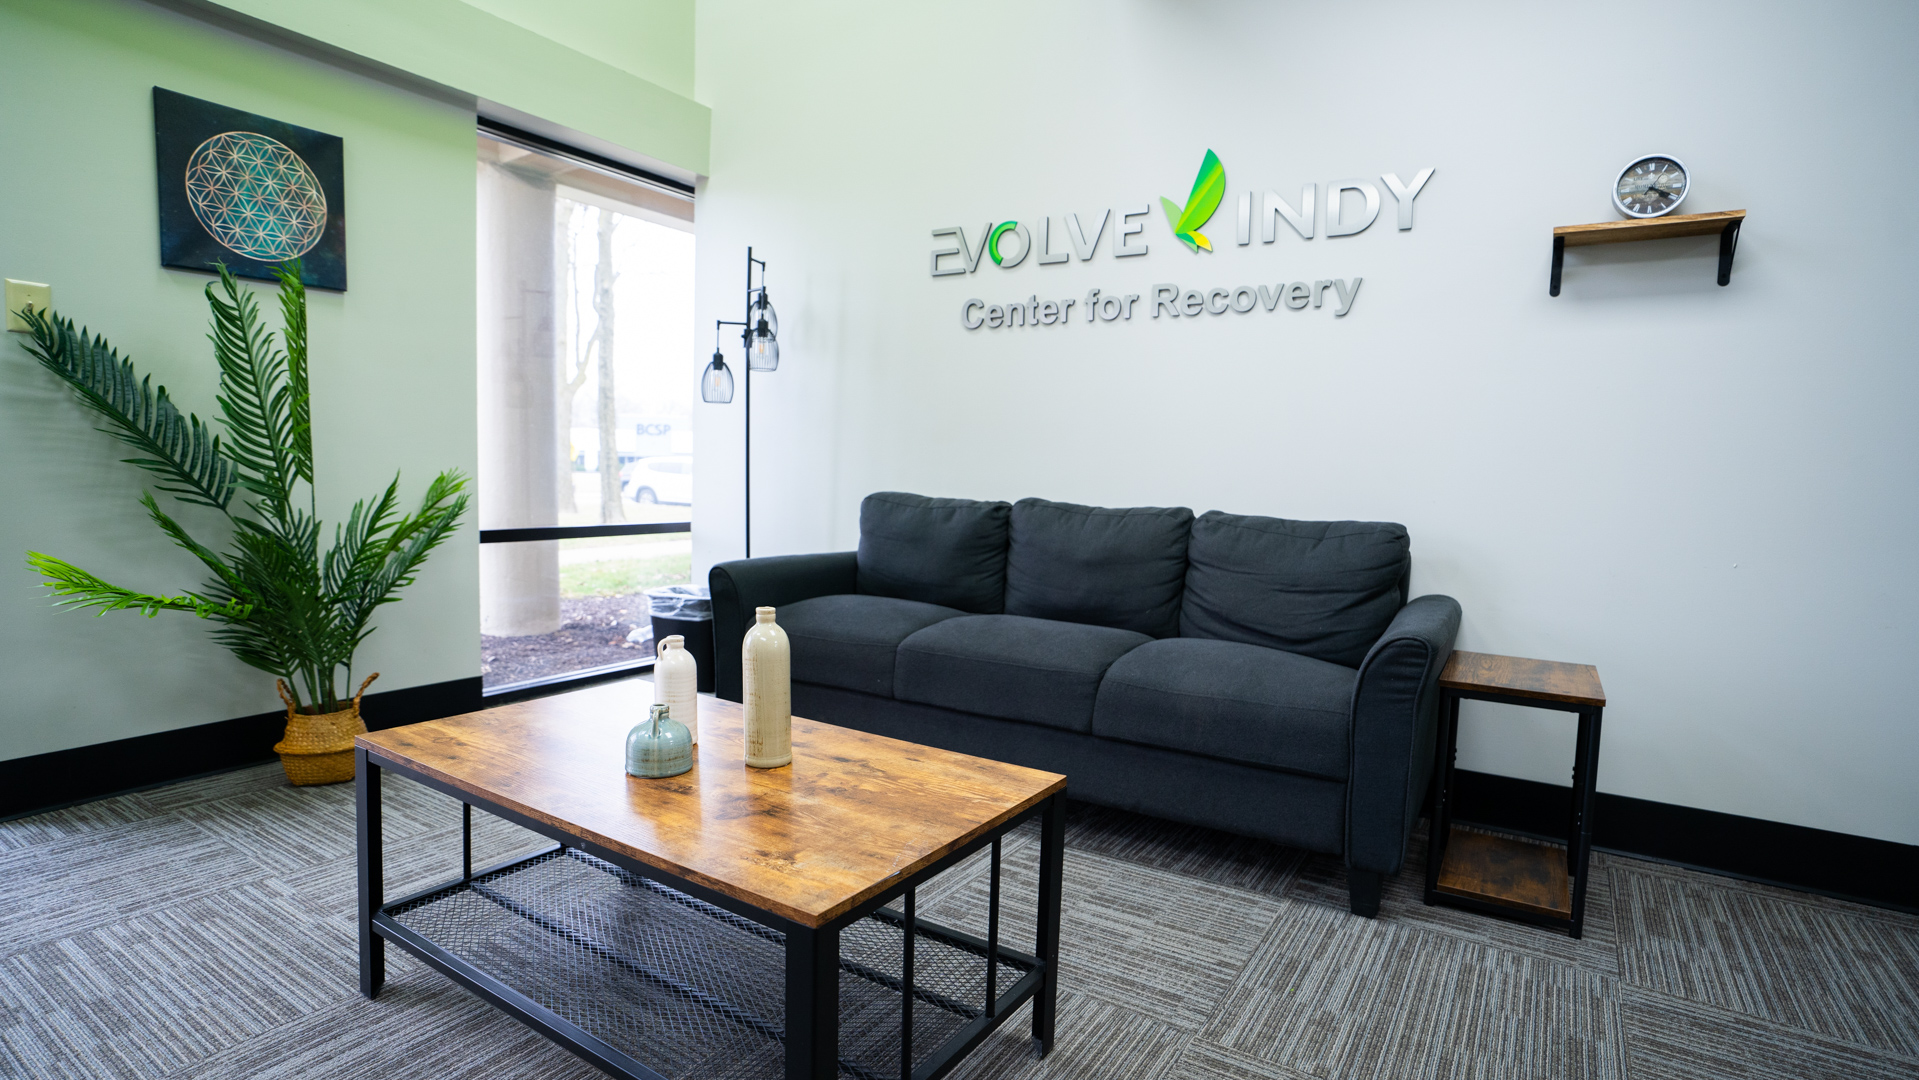 Evolve Indy Addiction Treatment Center 19